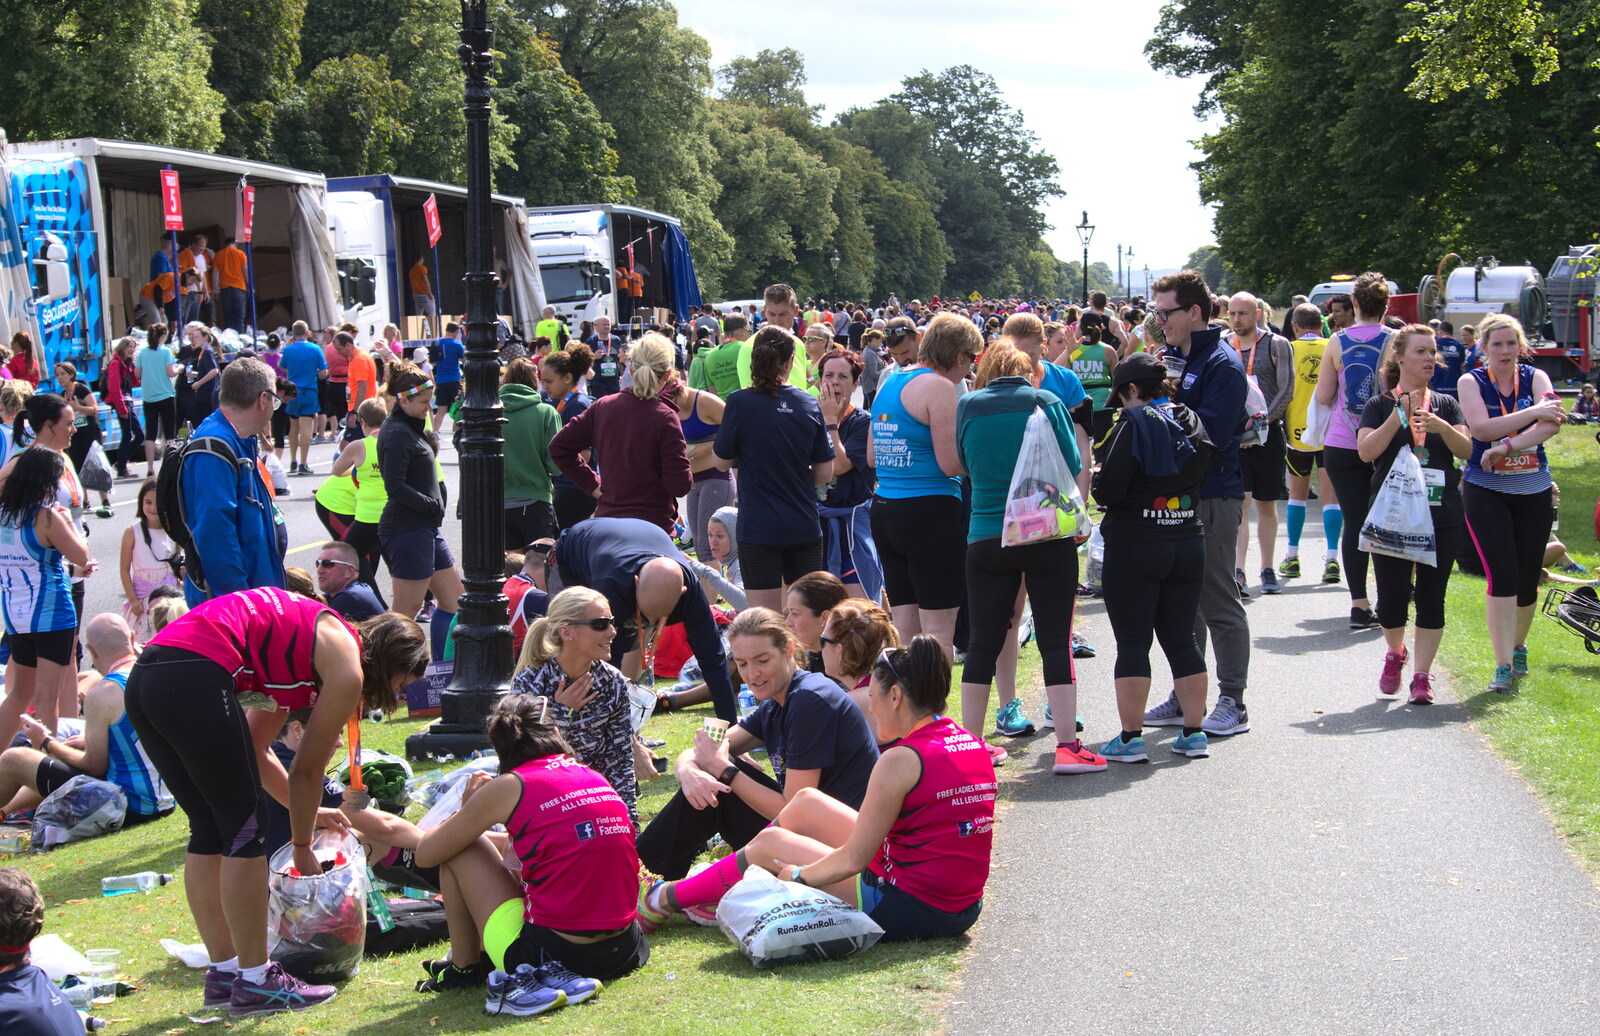 Masses of runners hang around from Isobel's Rock'n'Roll Half Marathon, Dublin, Ireland - 13th August 2017